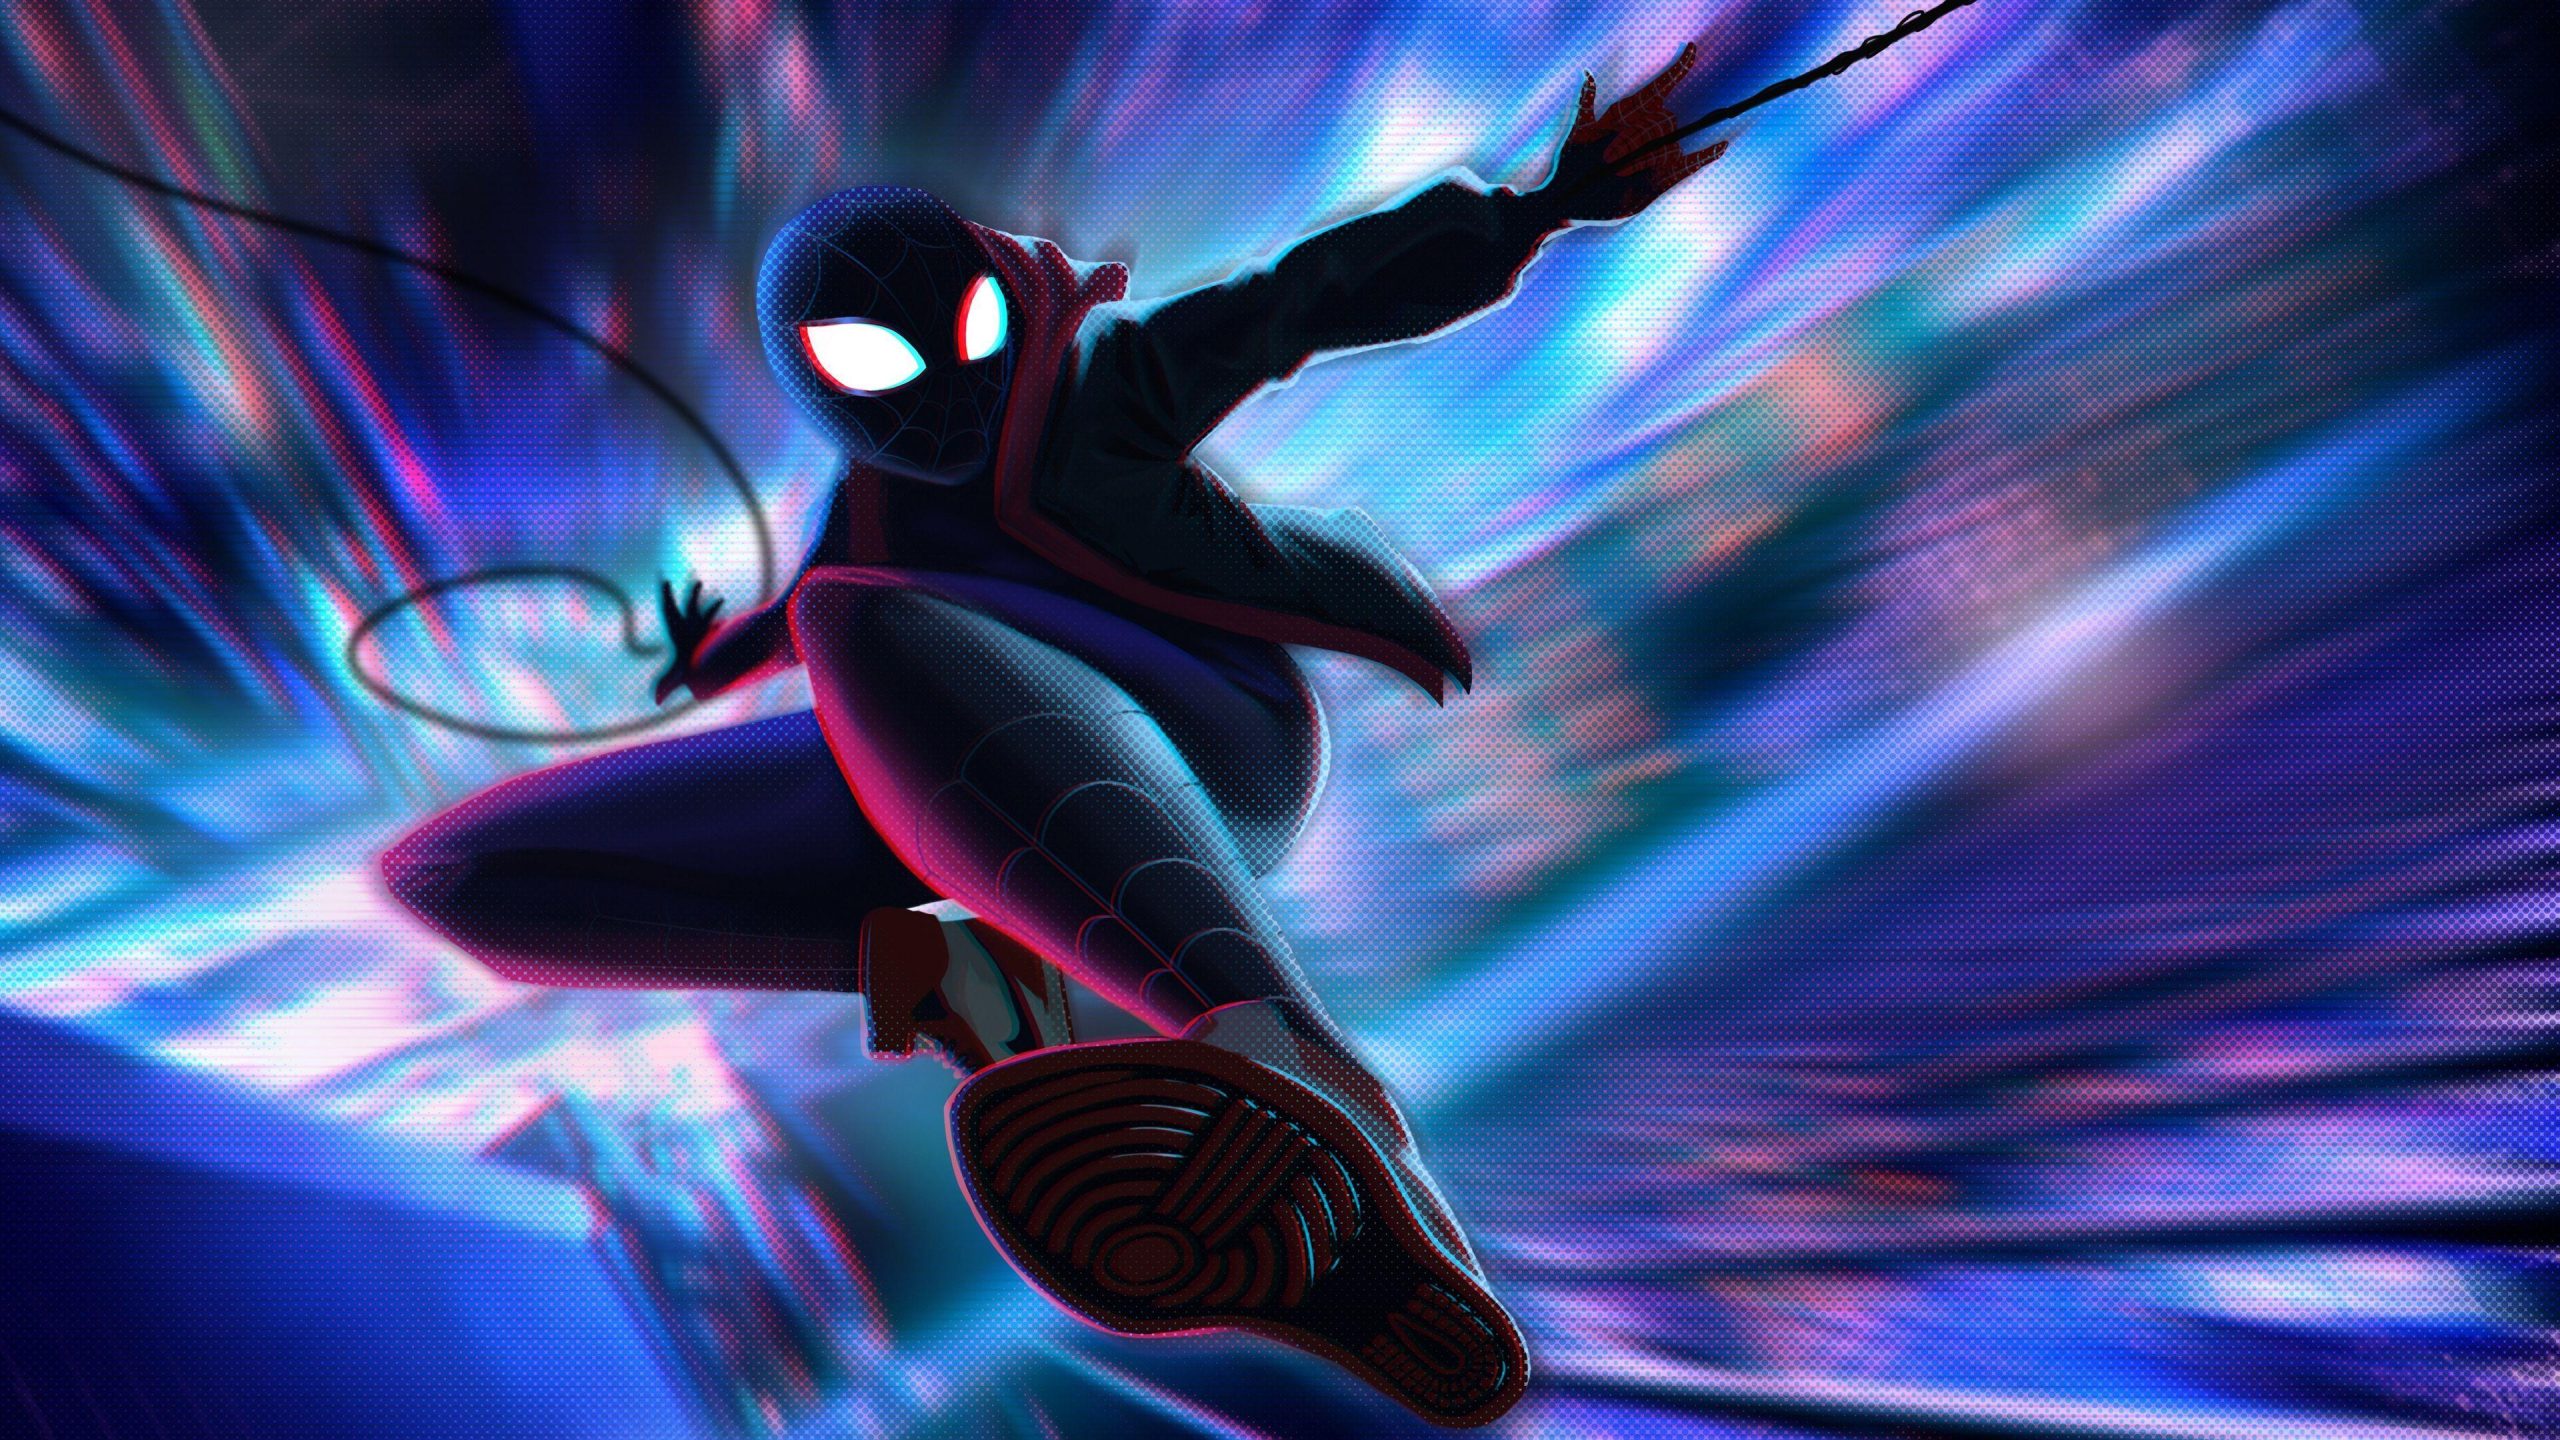 Miles Morales Spider-Man Desktop ipad wallpaper